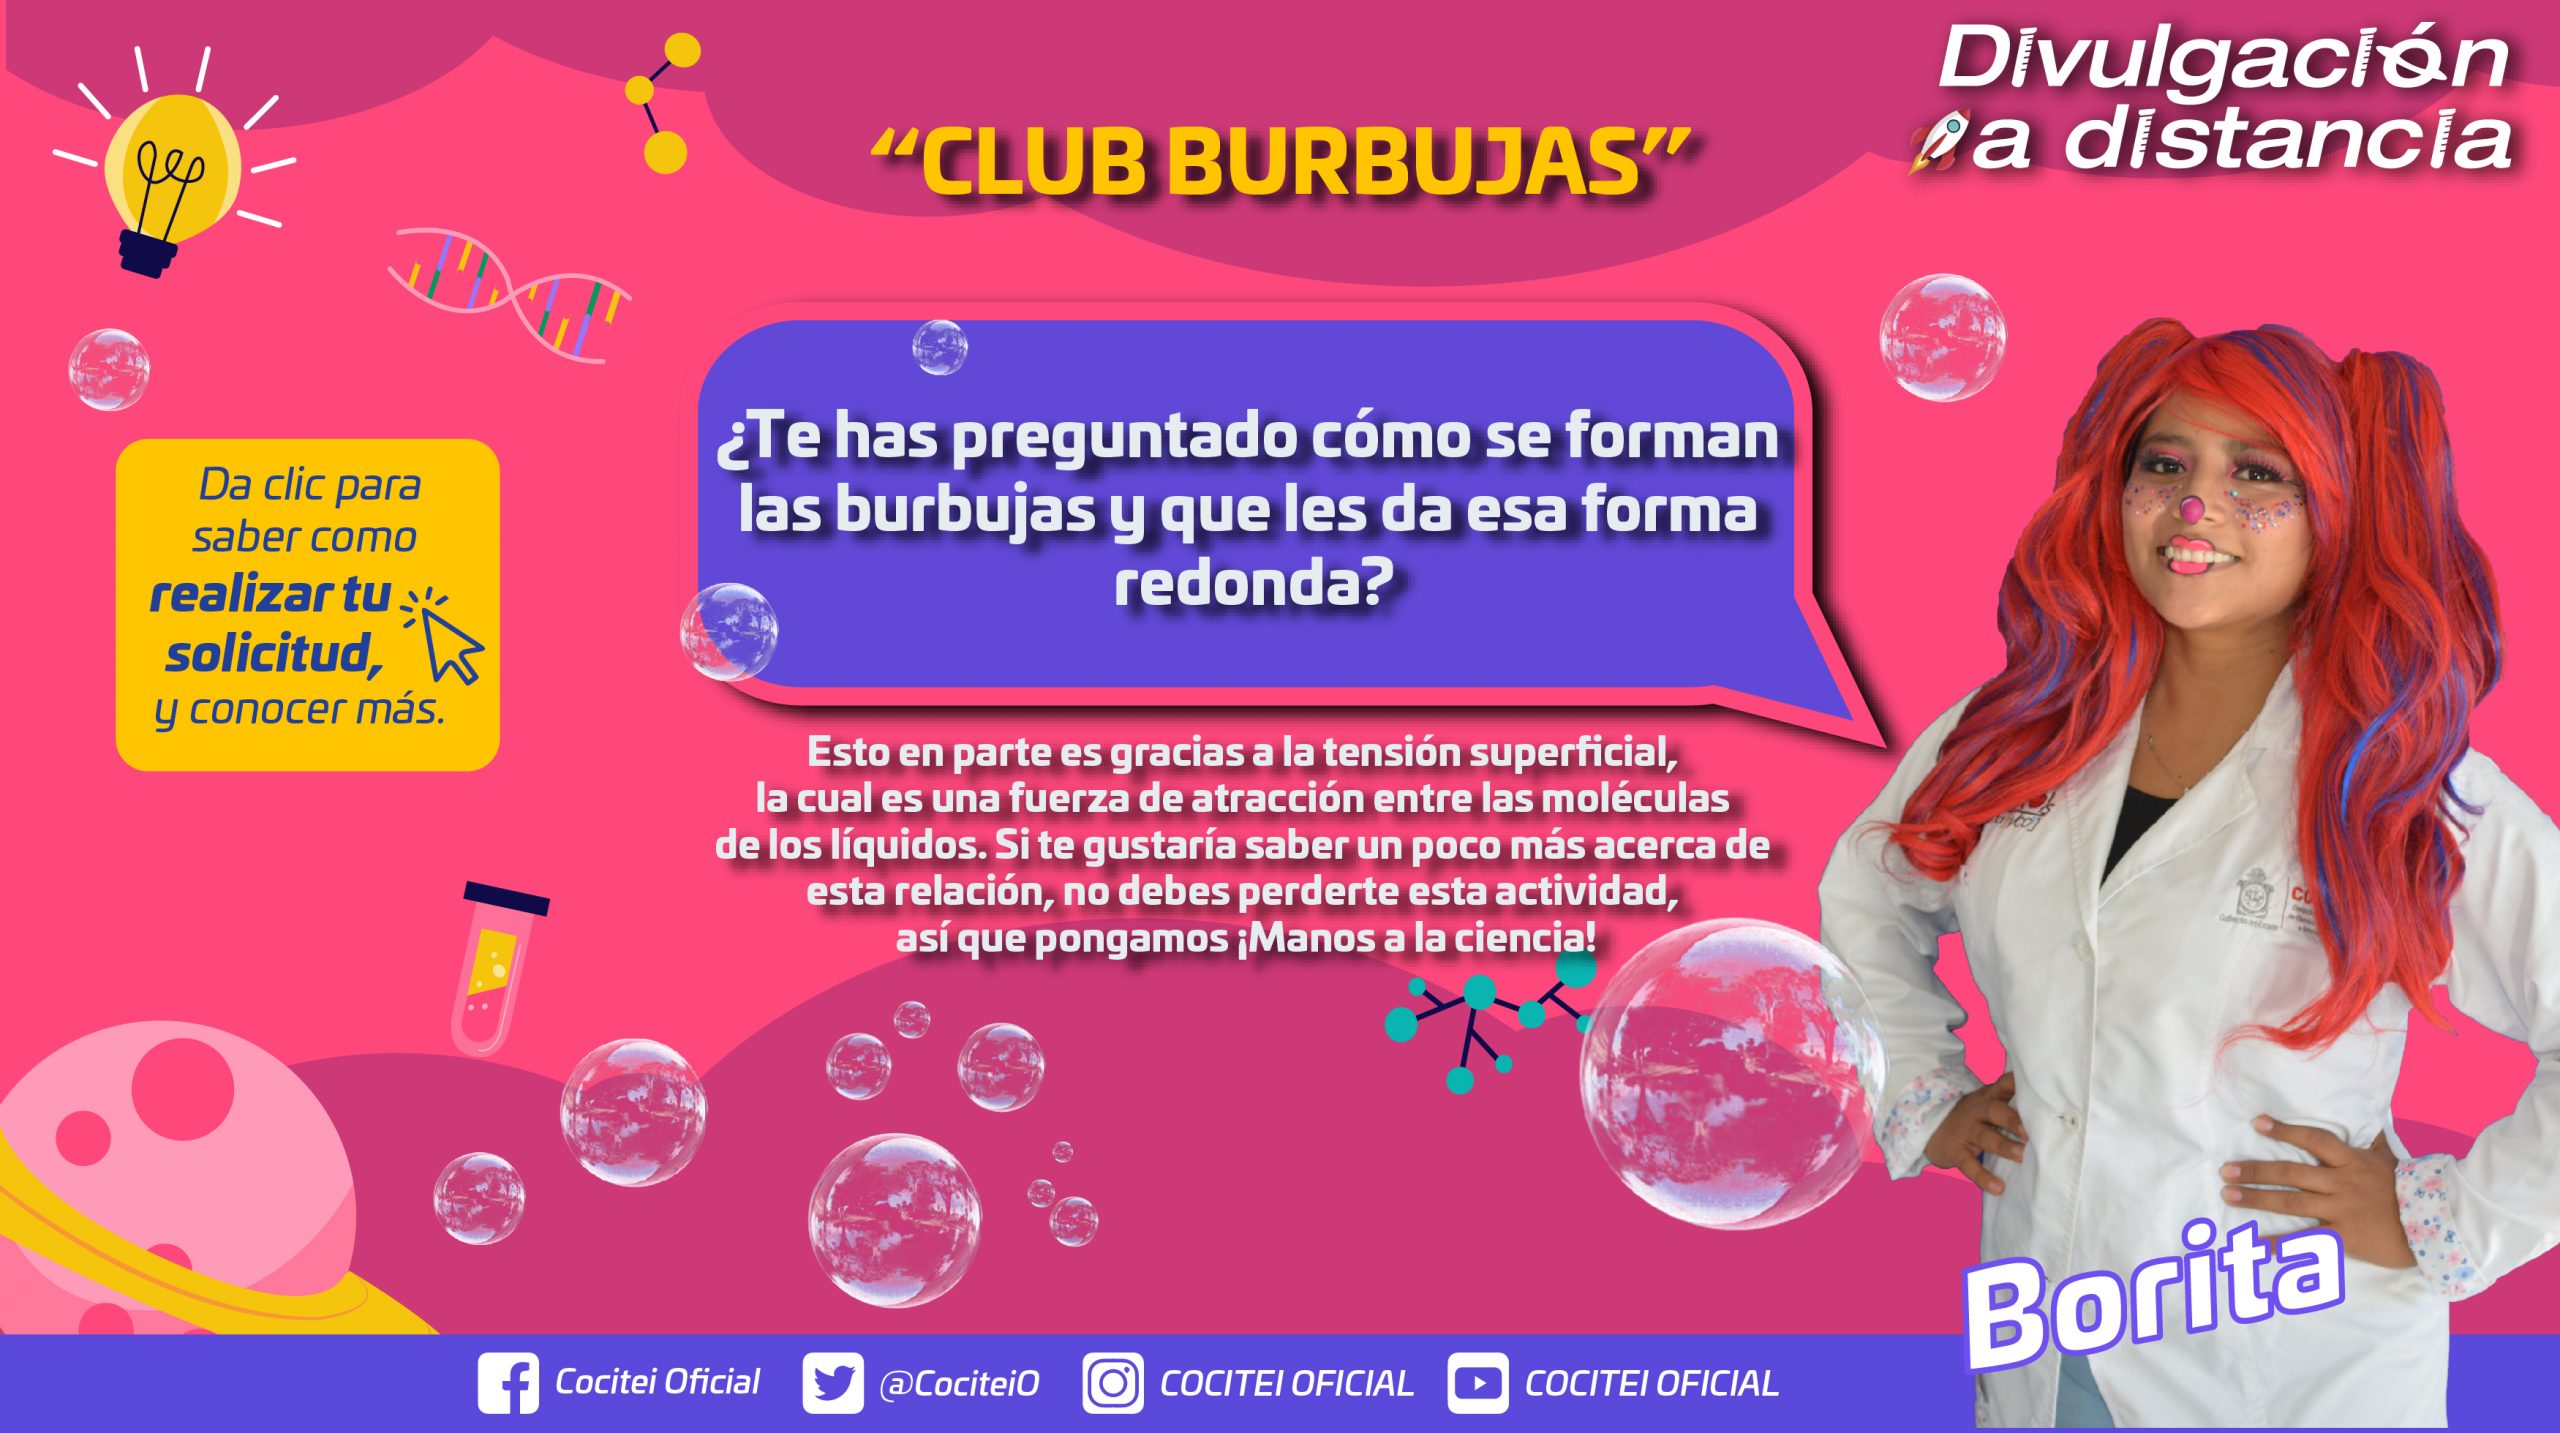 Club Burbujas